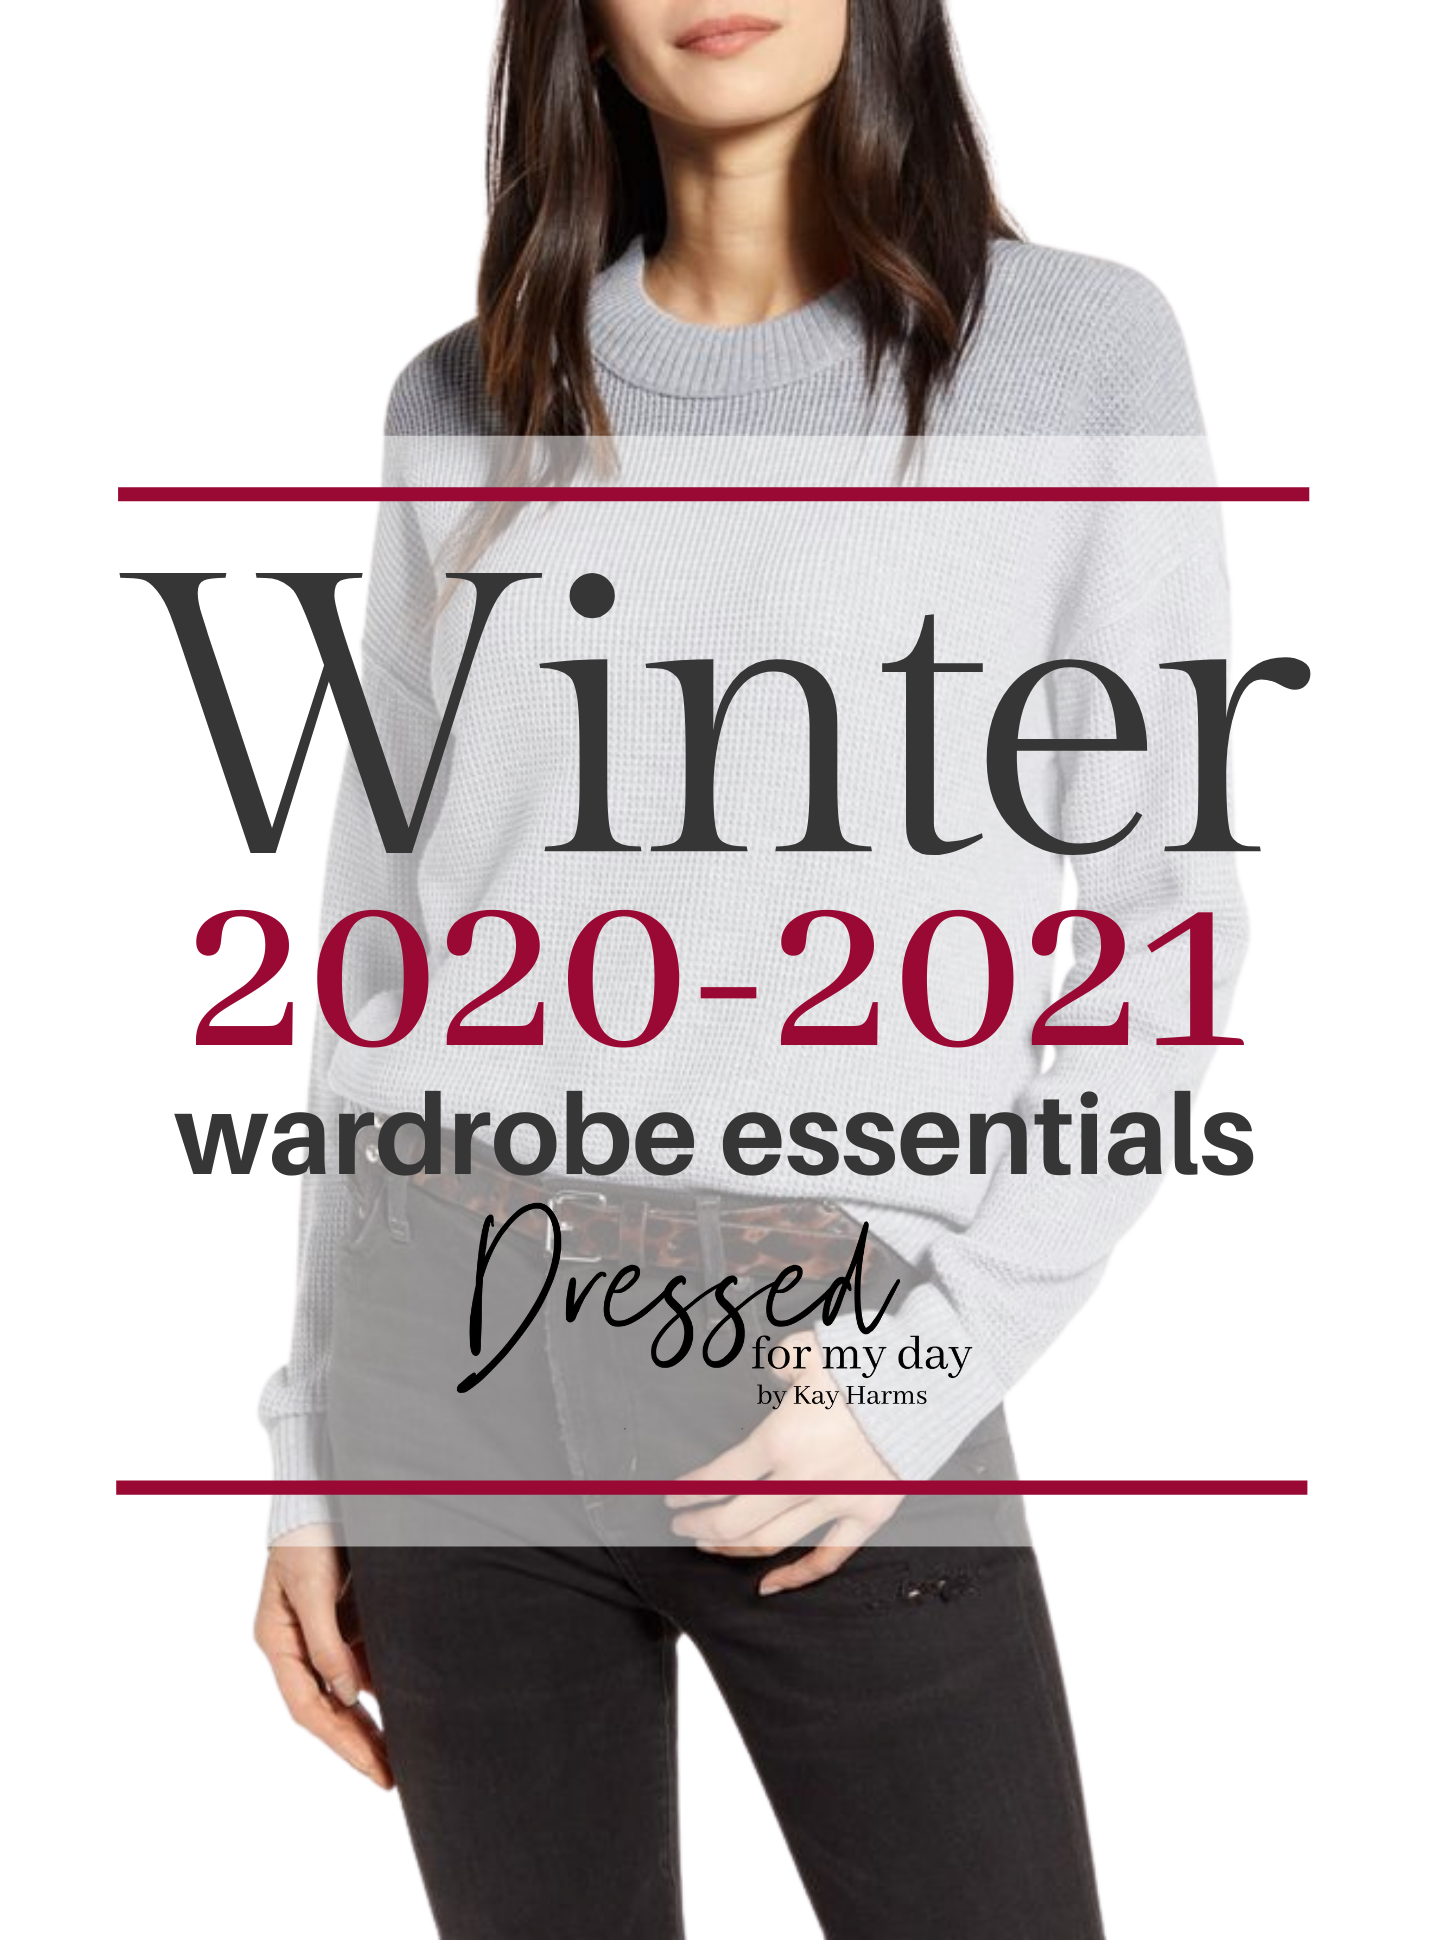 Winter Wardrobe Essentials 2020-2021 - Dressed for My Day